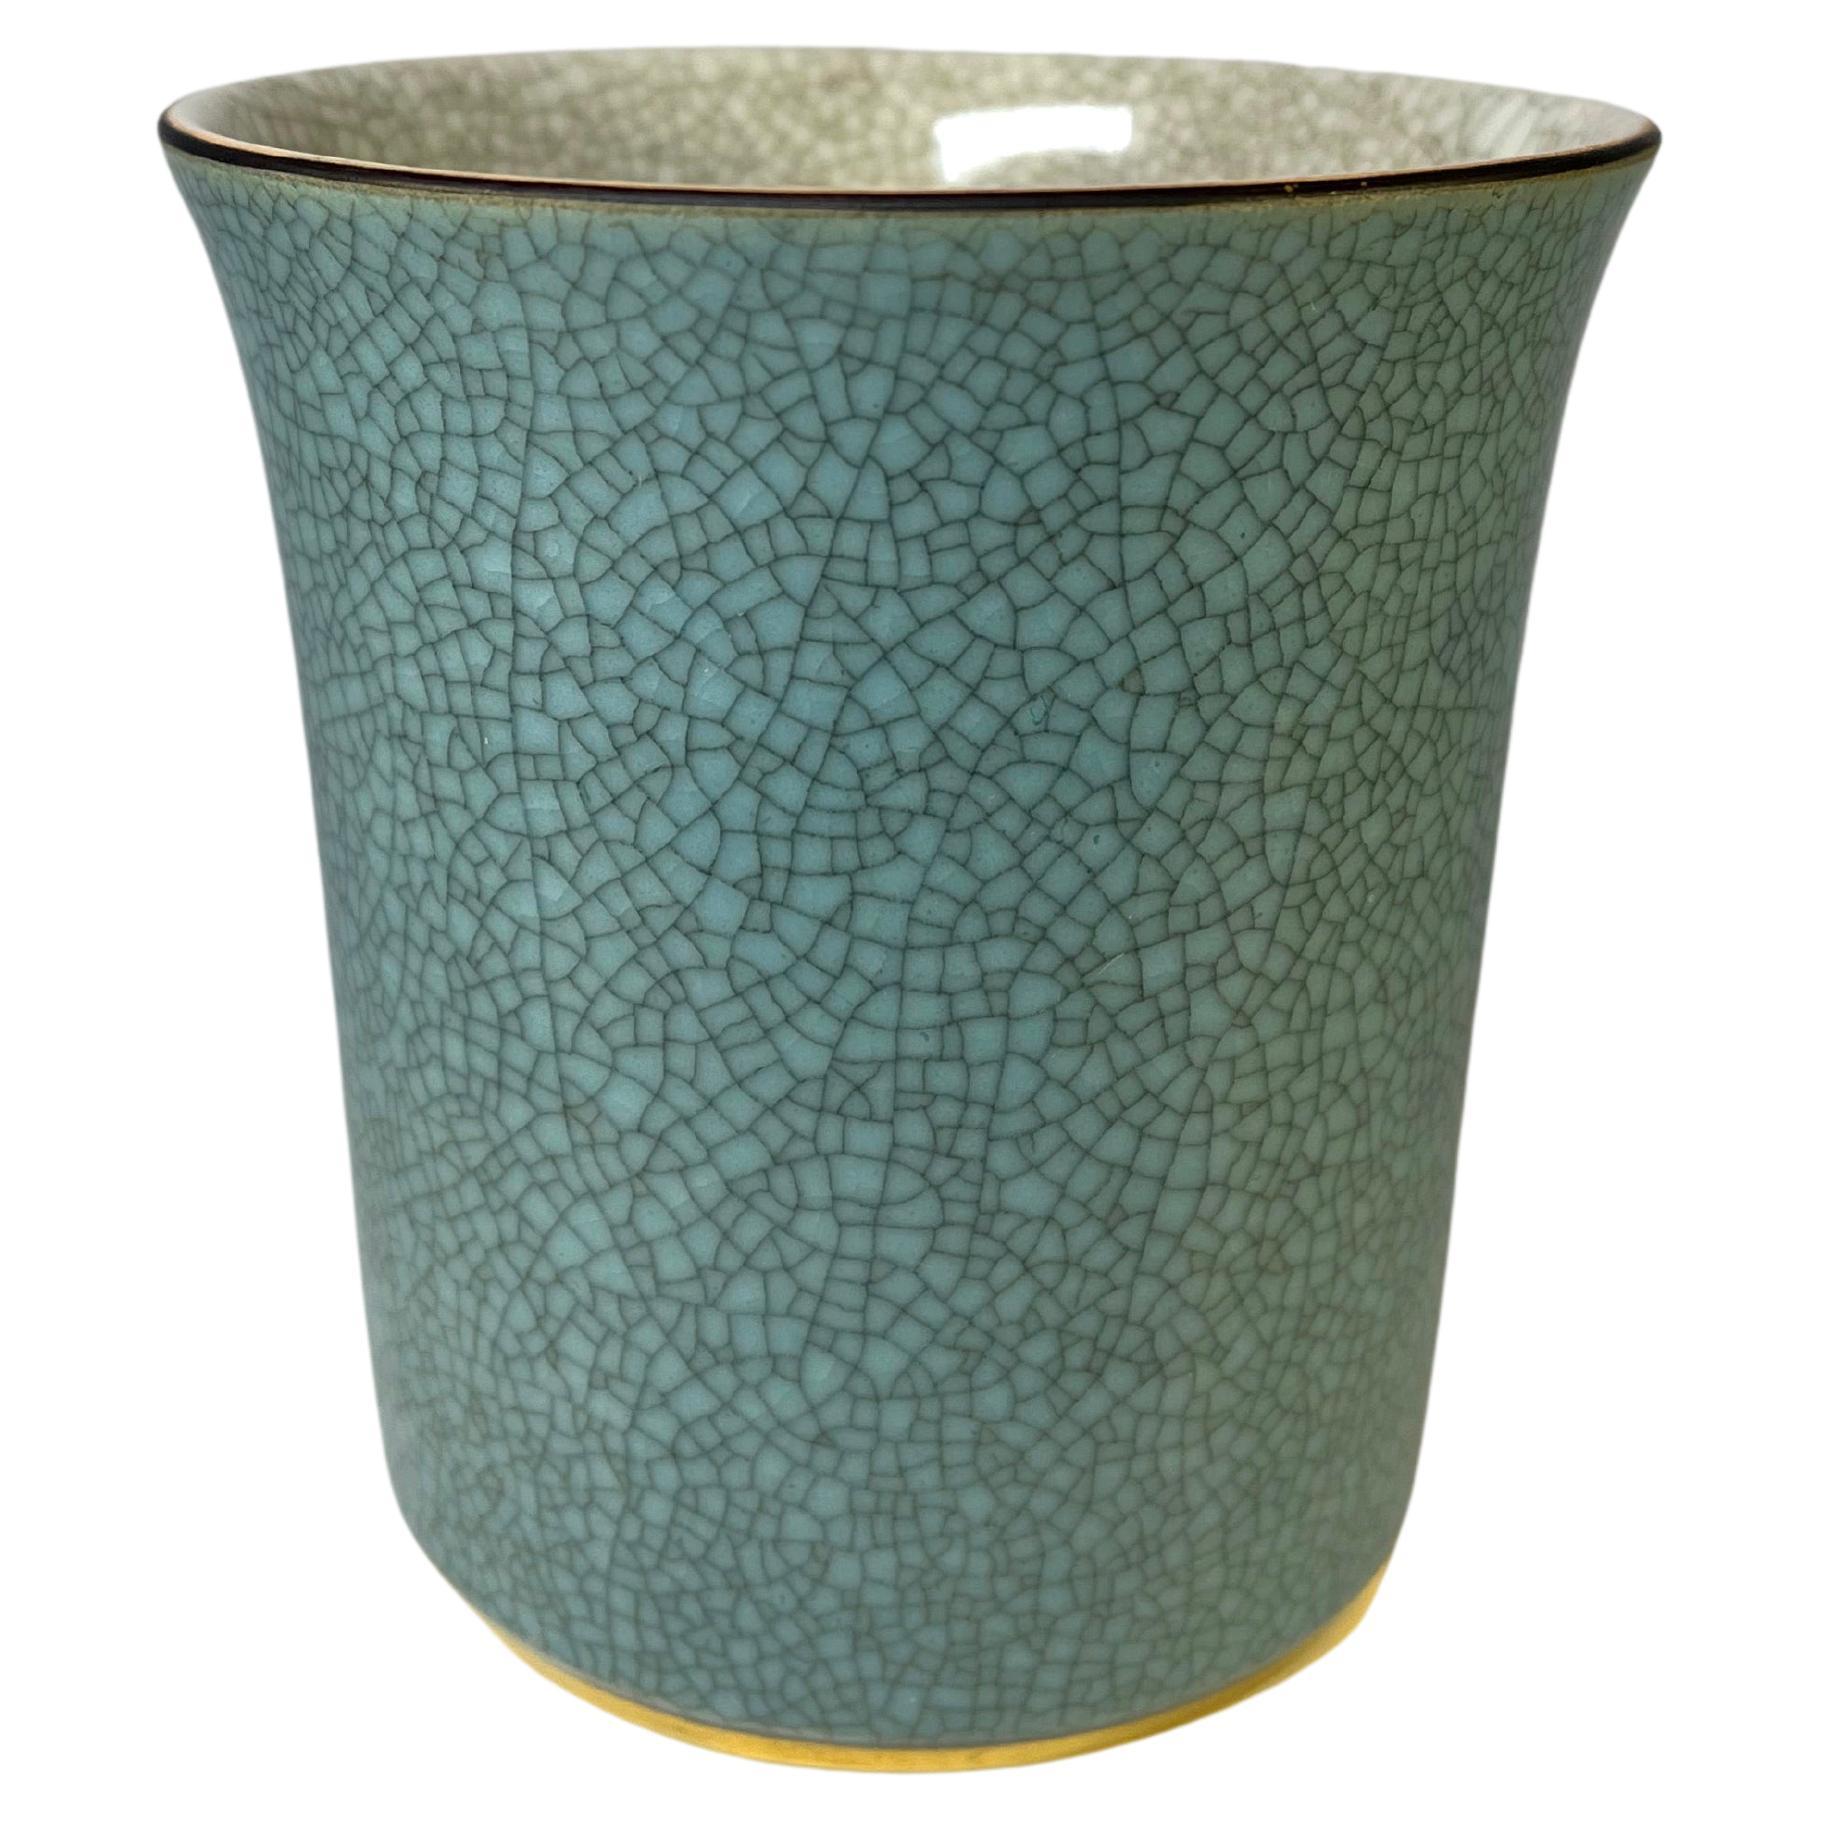 Royal Copenhagen Turquoise Crackle Glaze Tumbler Pot With Gilded Band Decoration